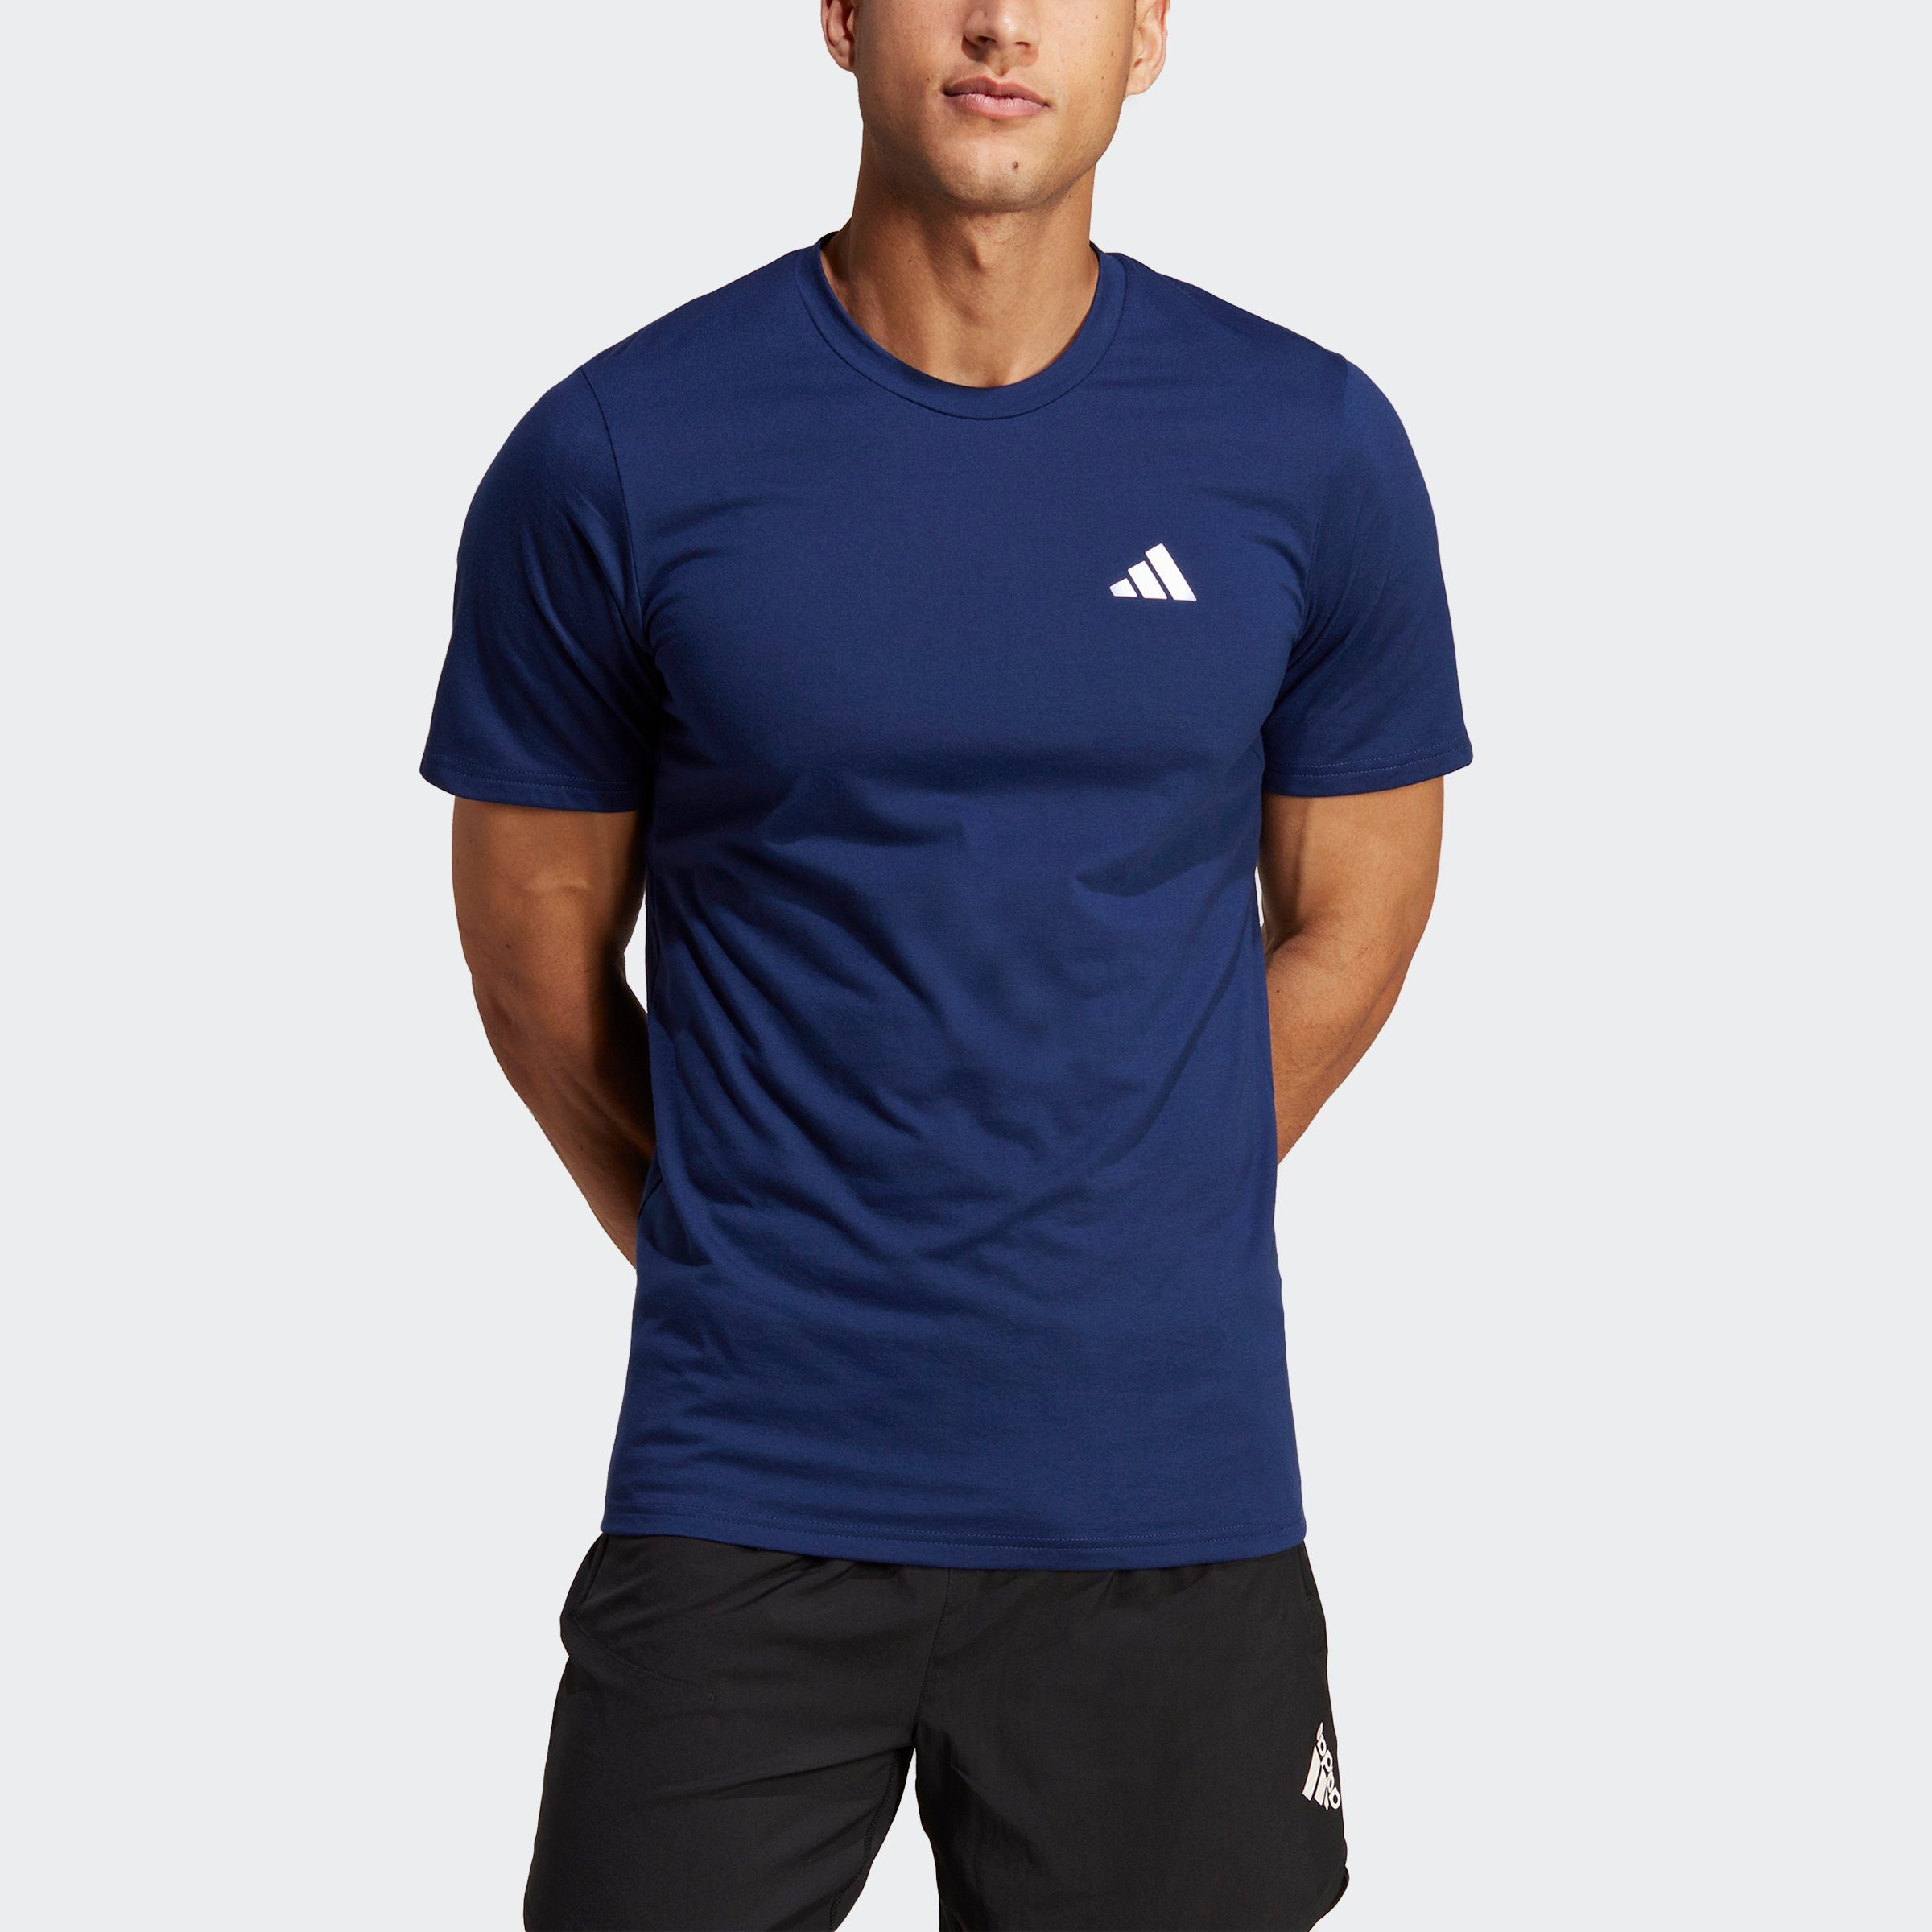 TR-ES / T White Dark Performance Blue T-Shirt adidas FR